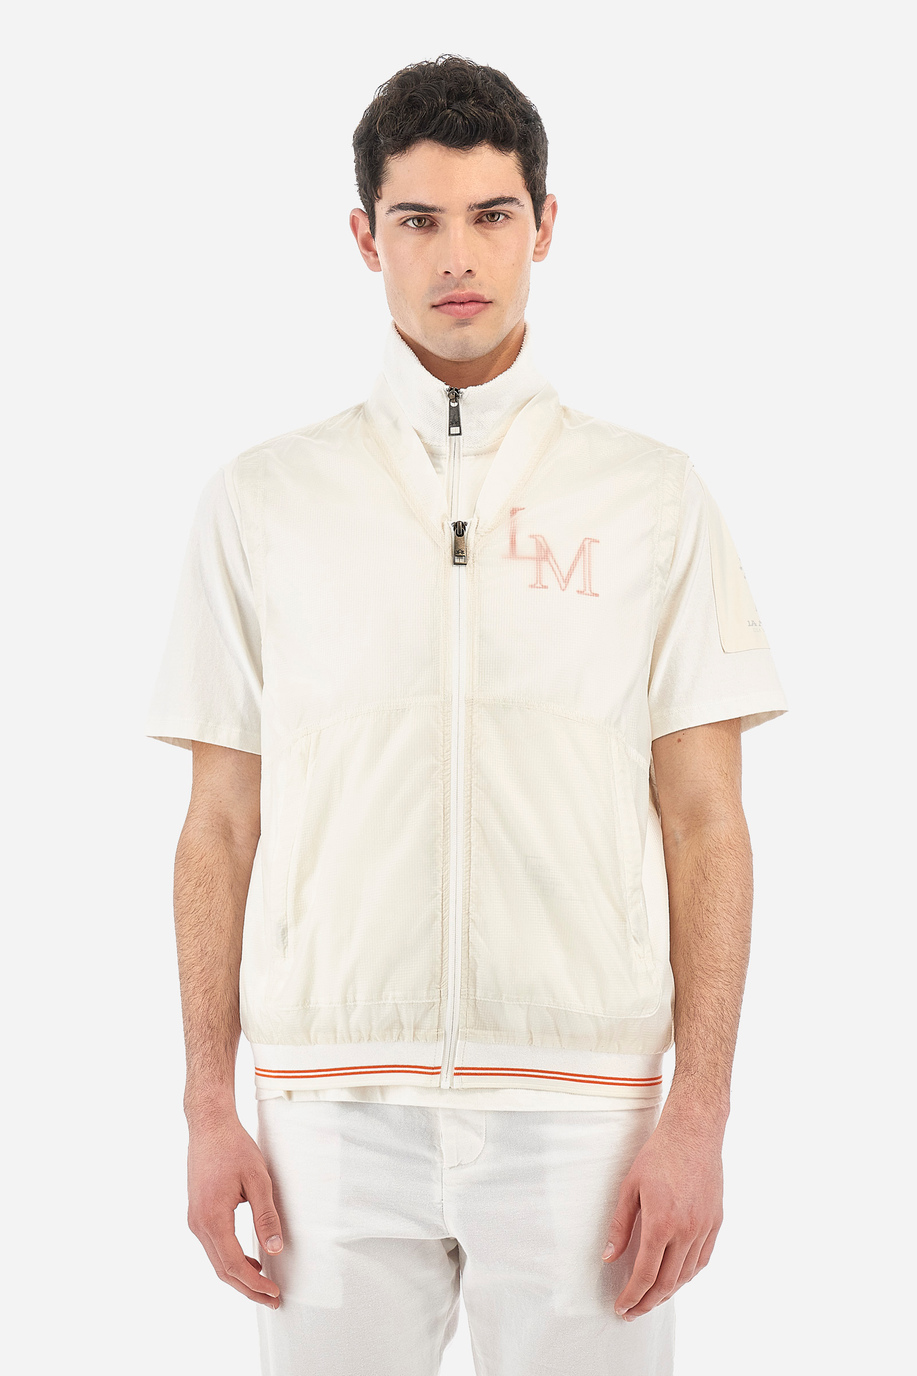 Men's vest with high collar and regular fit zip - Vermont - Outerwear | La Martina - Official Online Shop